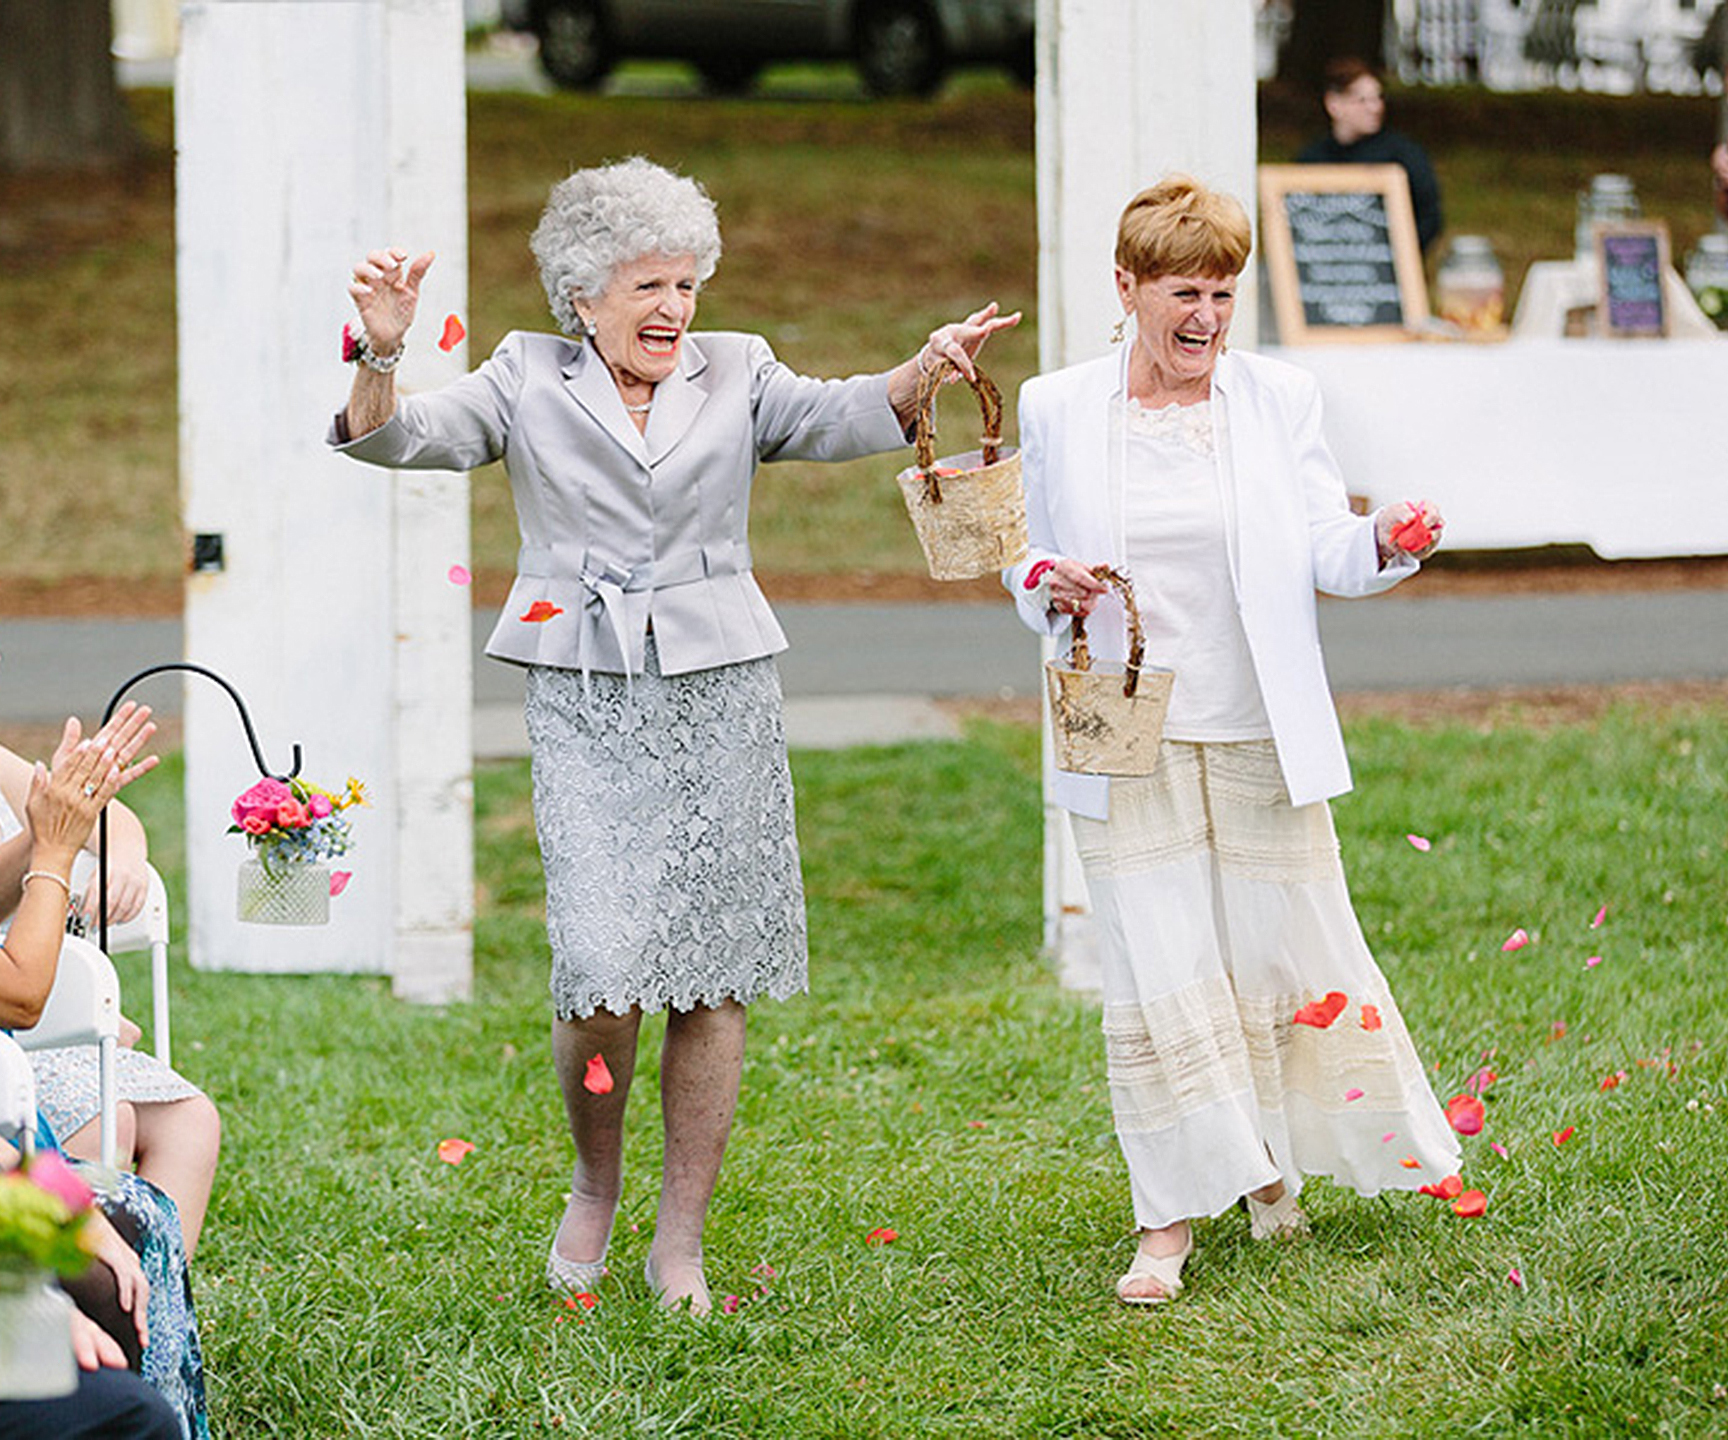 Grandma ‘flower girls’ steal wedding spotlight